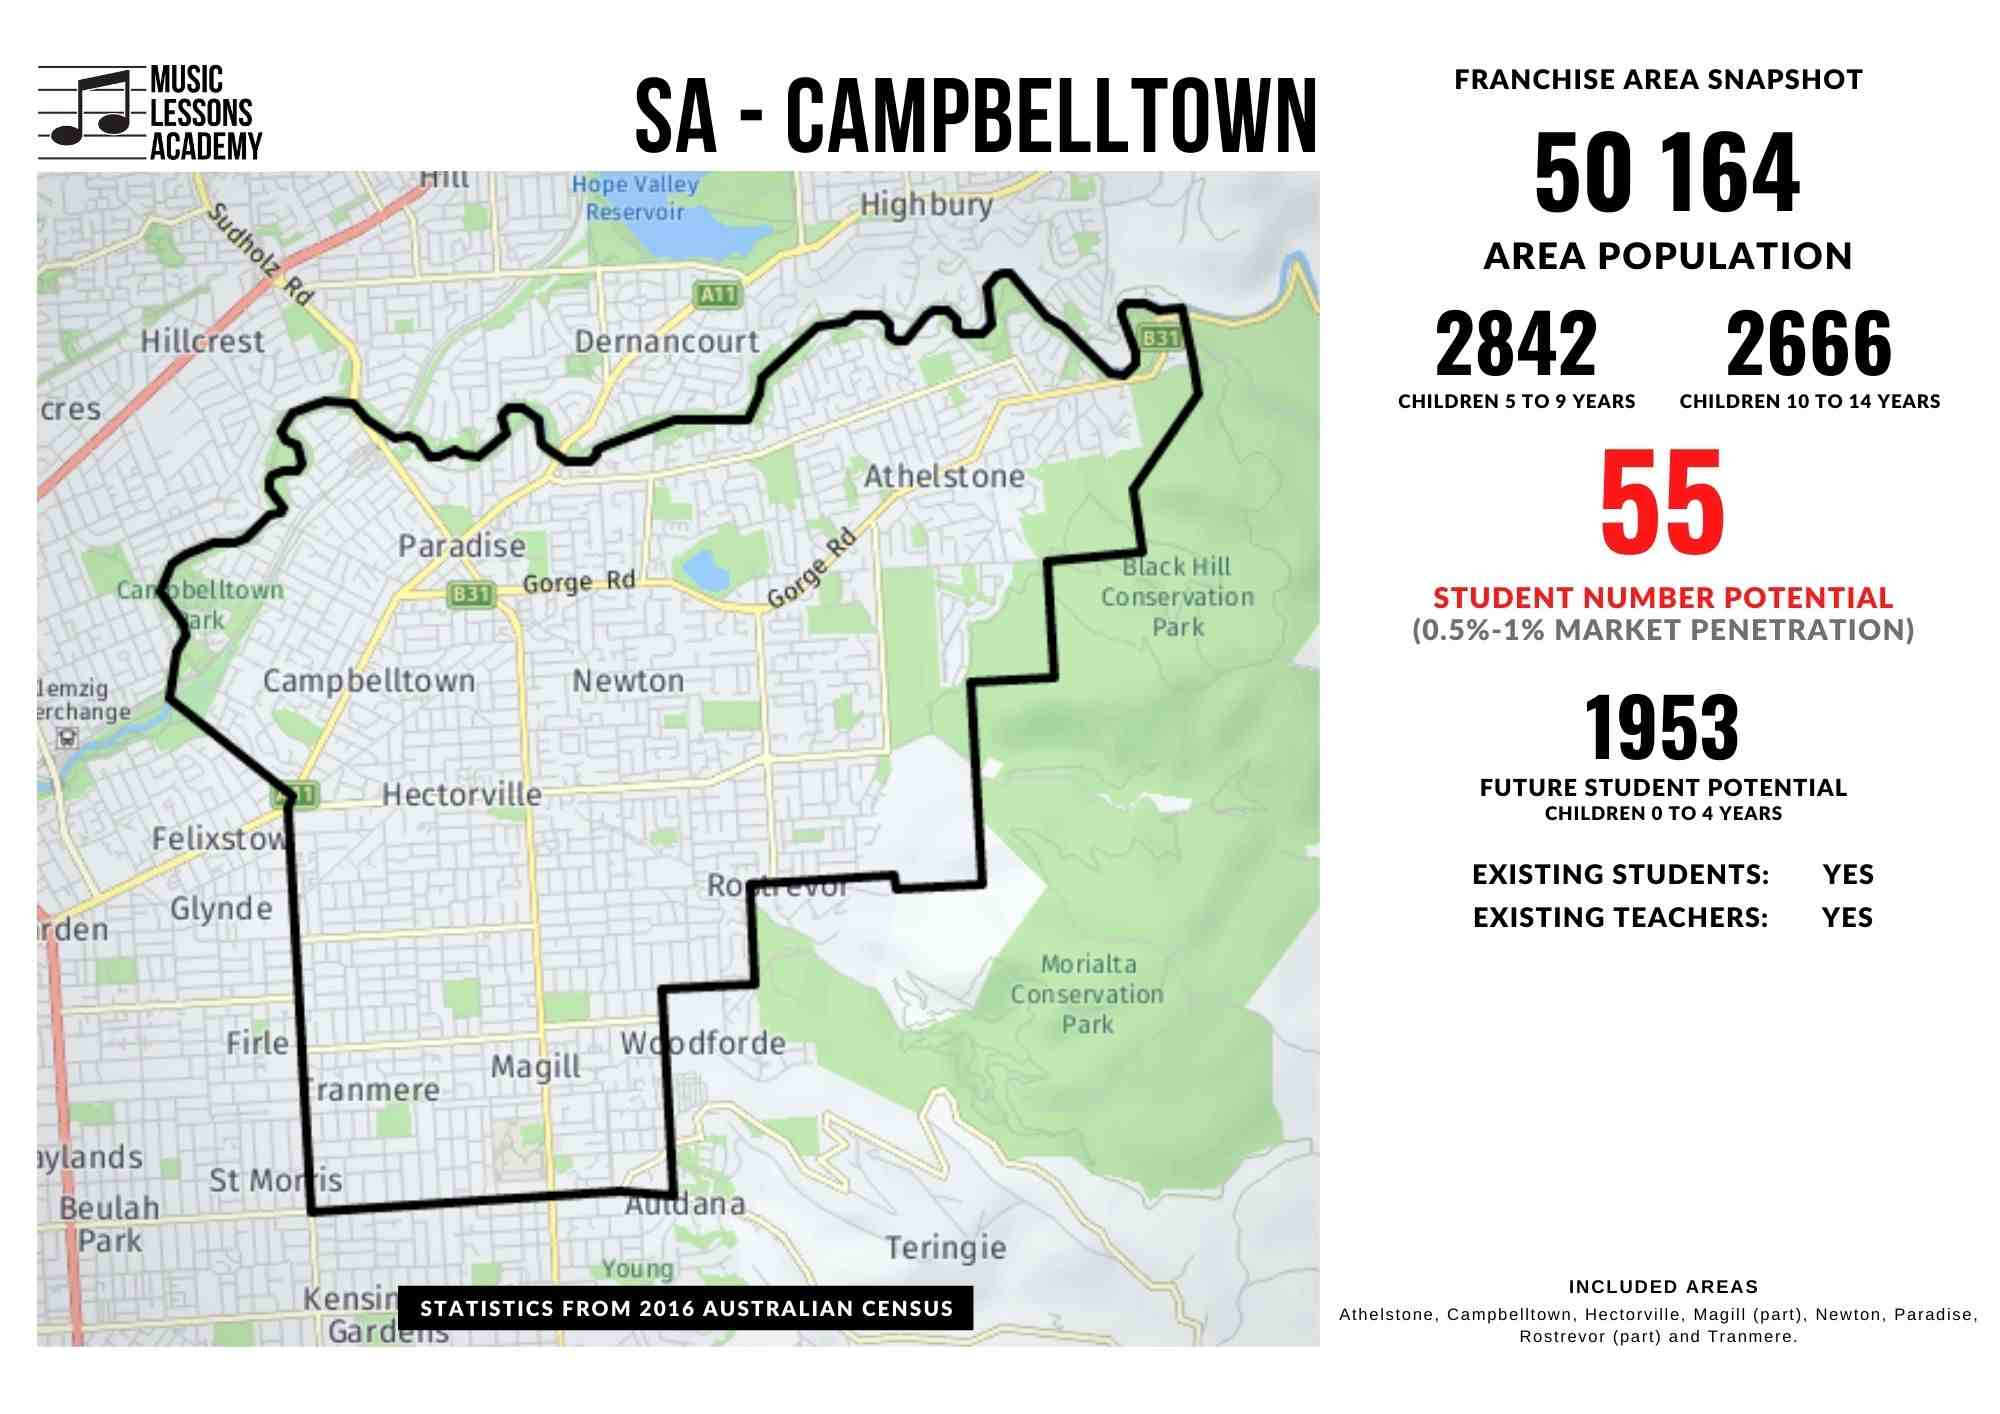 SA Campbelltown Franchise for sale